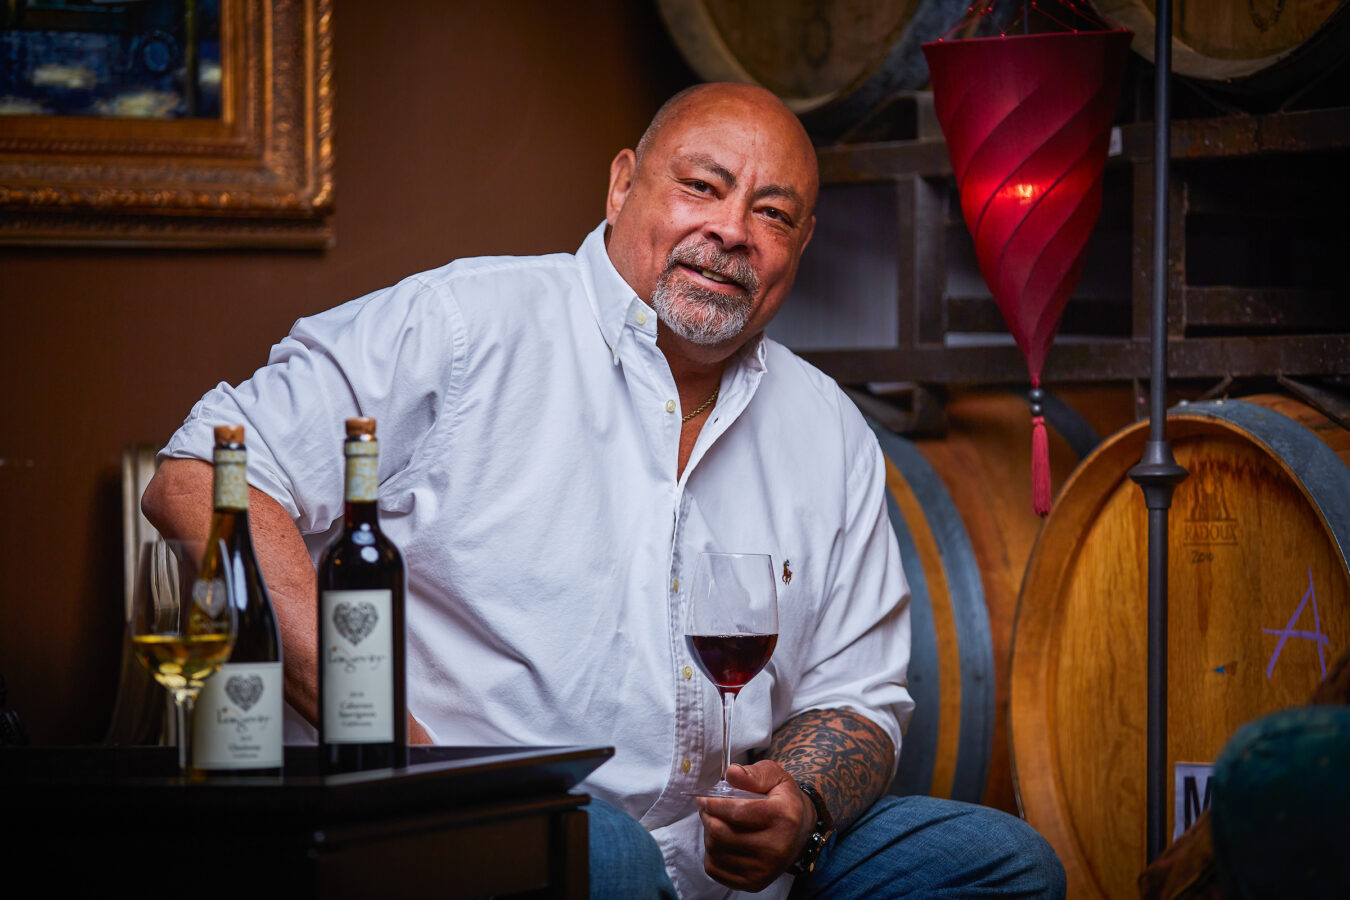 Phil Long, black wine maker and founder of Longevity Wines